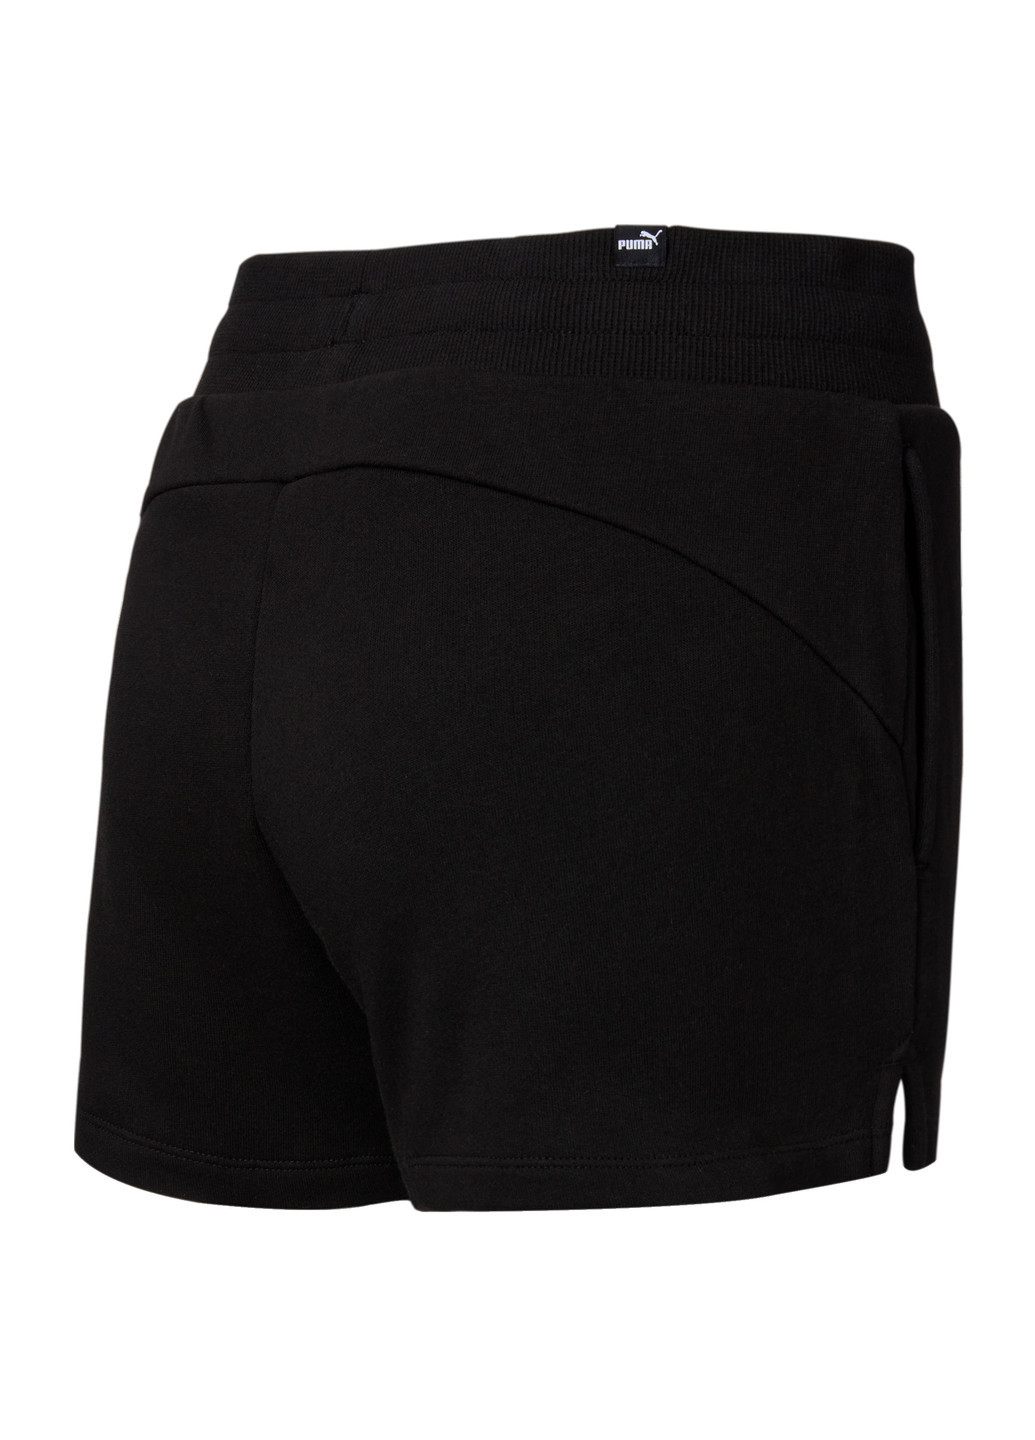 Шорты Essentials Women’s Sweat Shorts Puma (253563940)